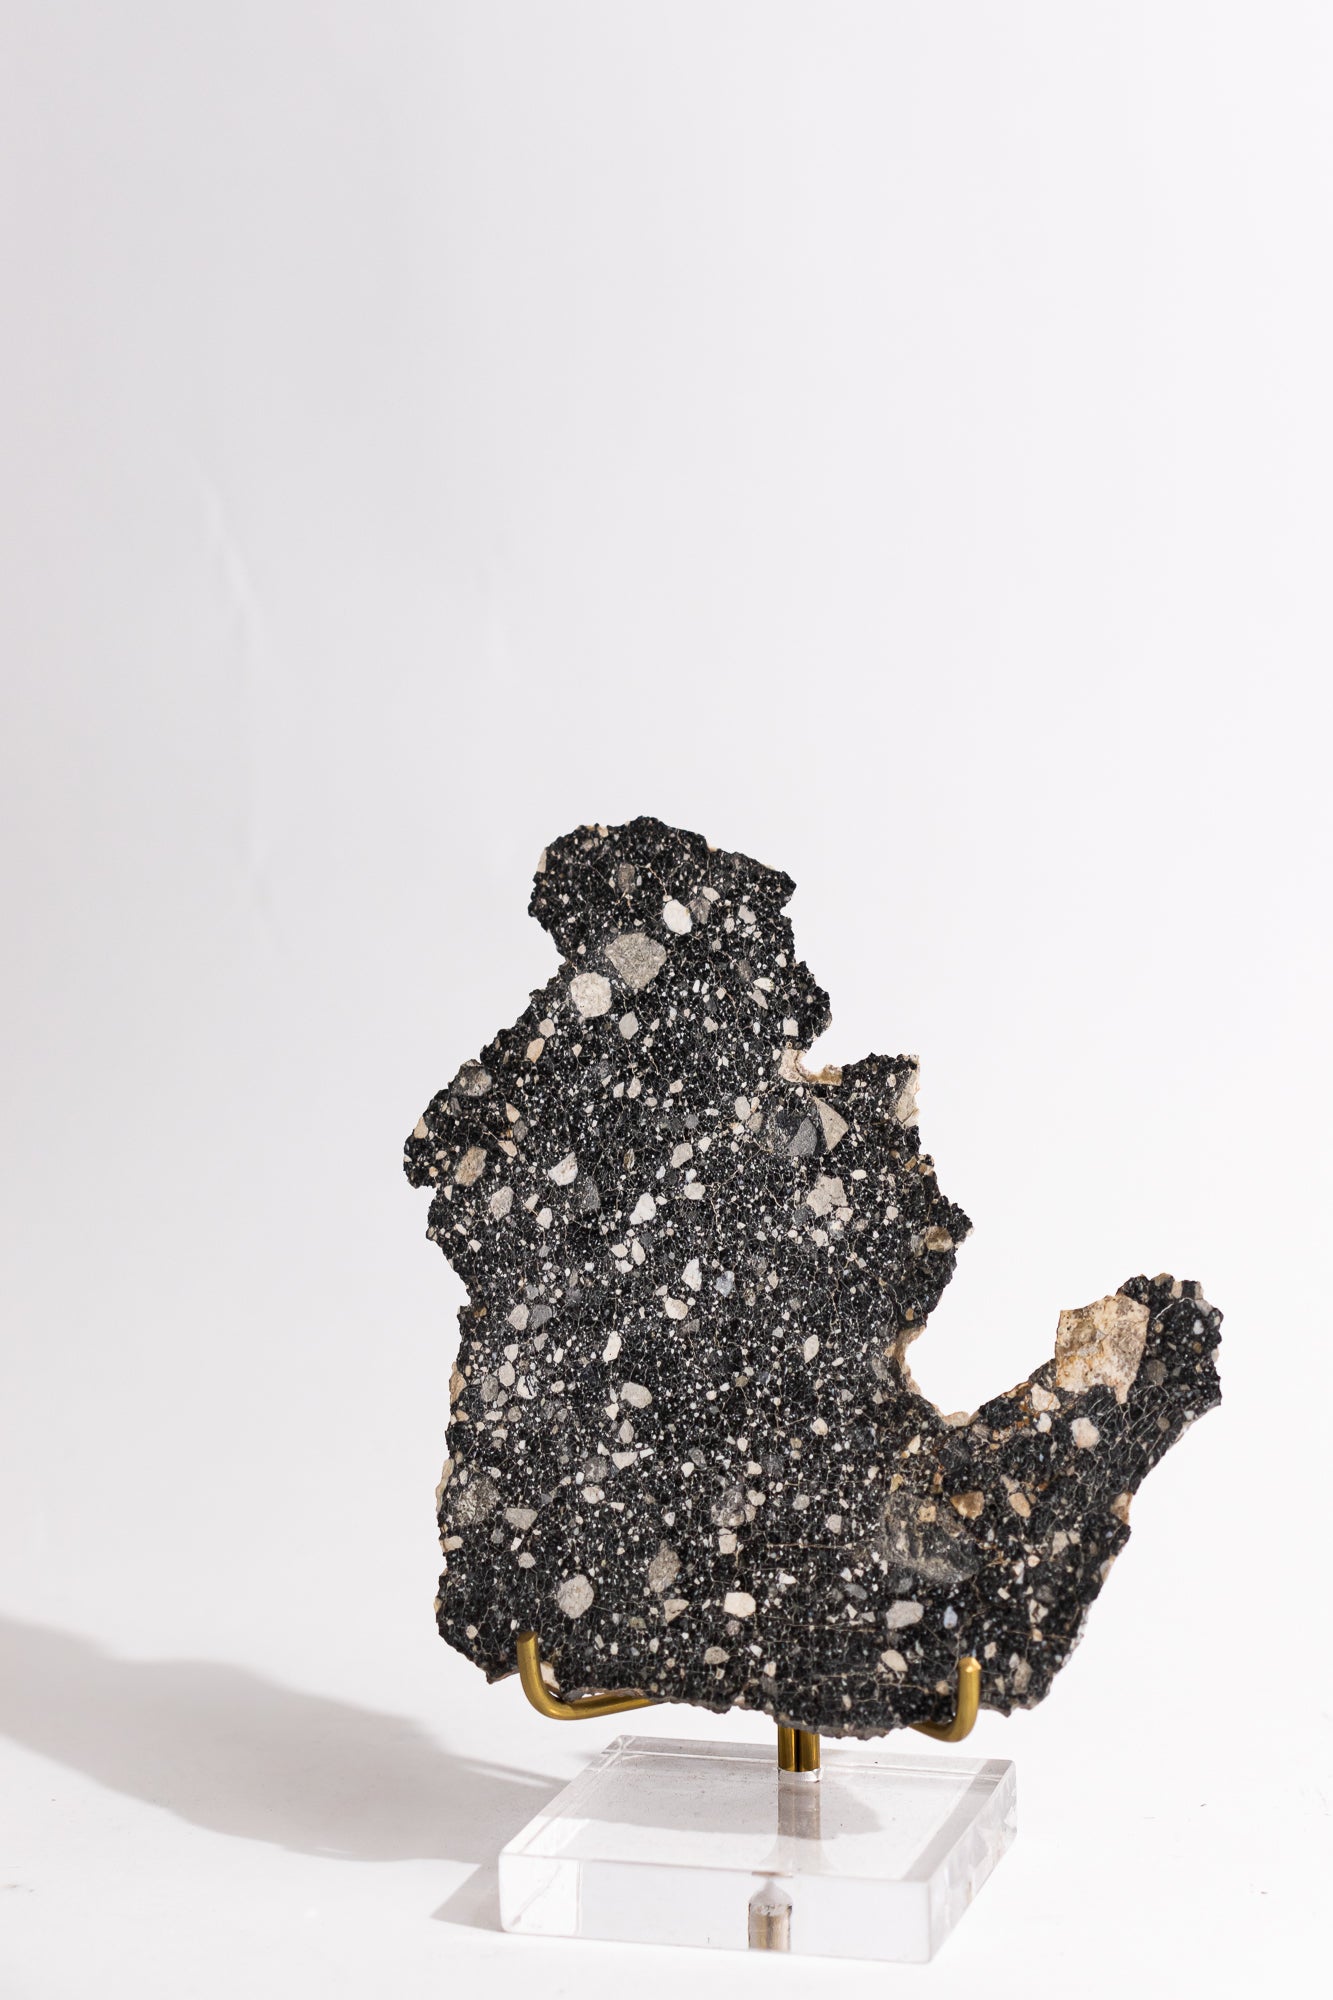 Lunar Meteorite NWA14685